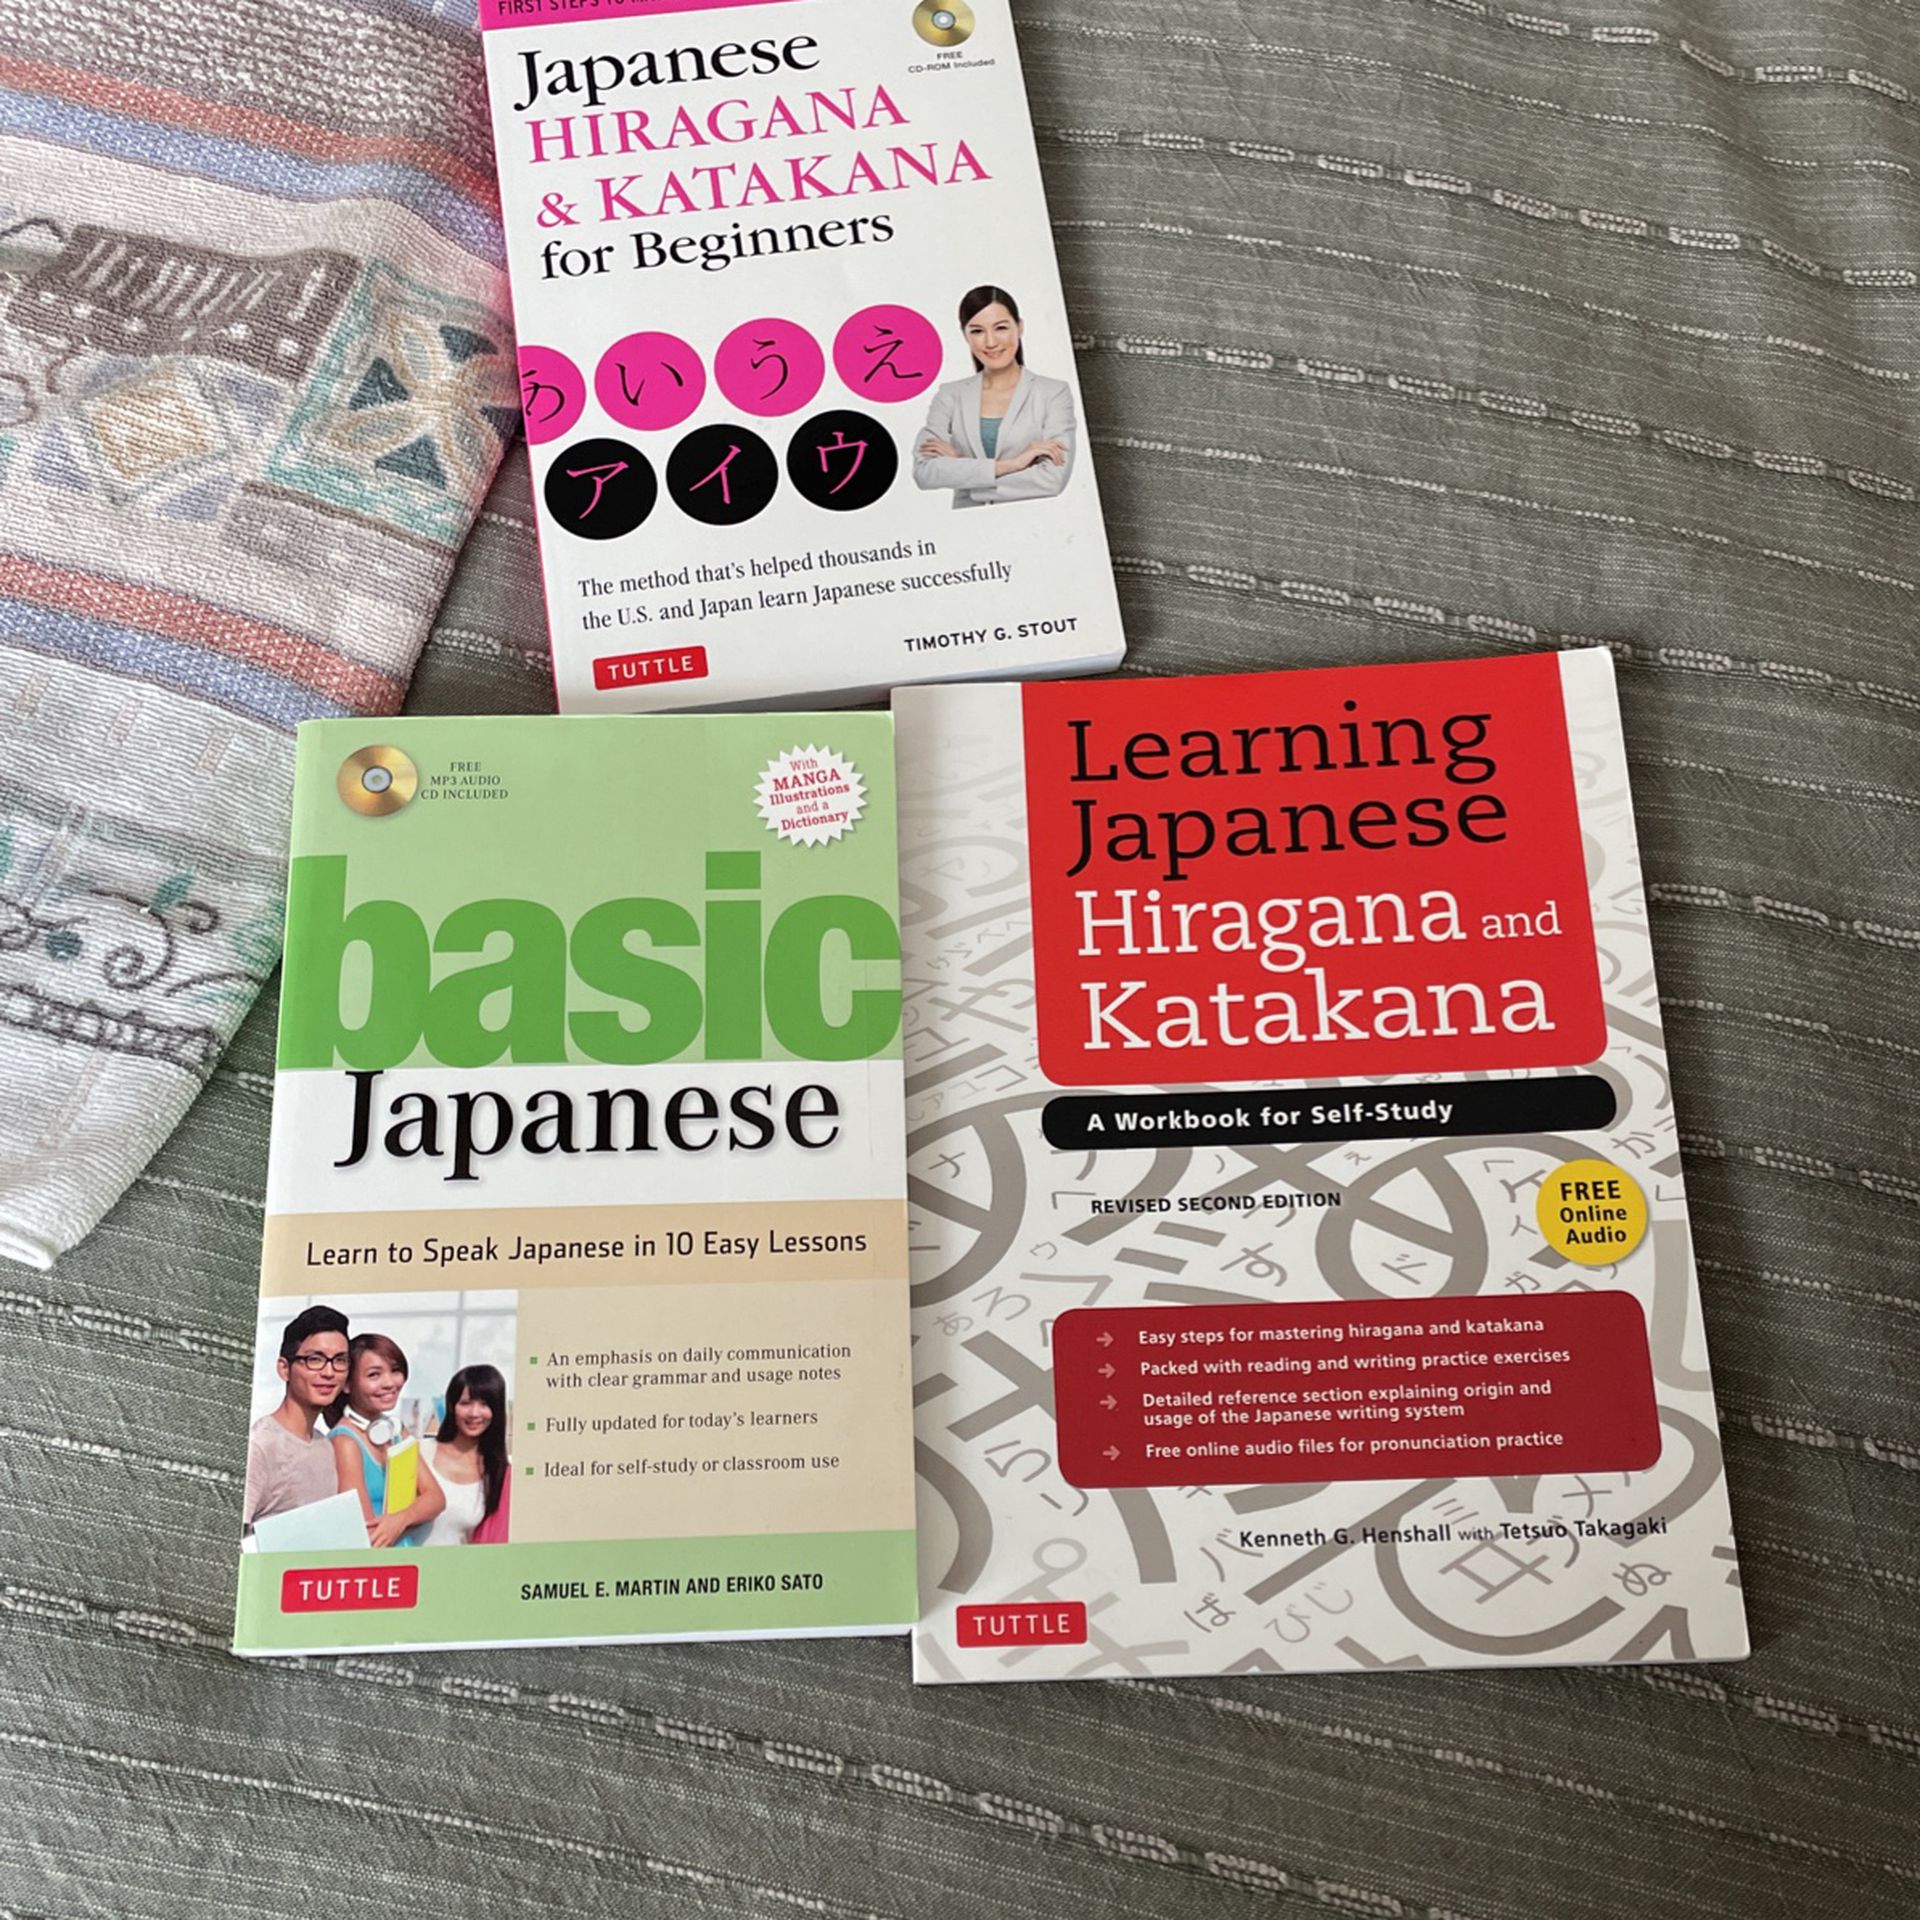 3 Set Of Japanese Learning Books